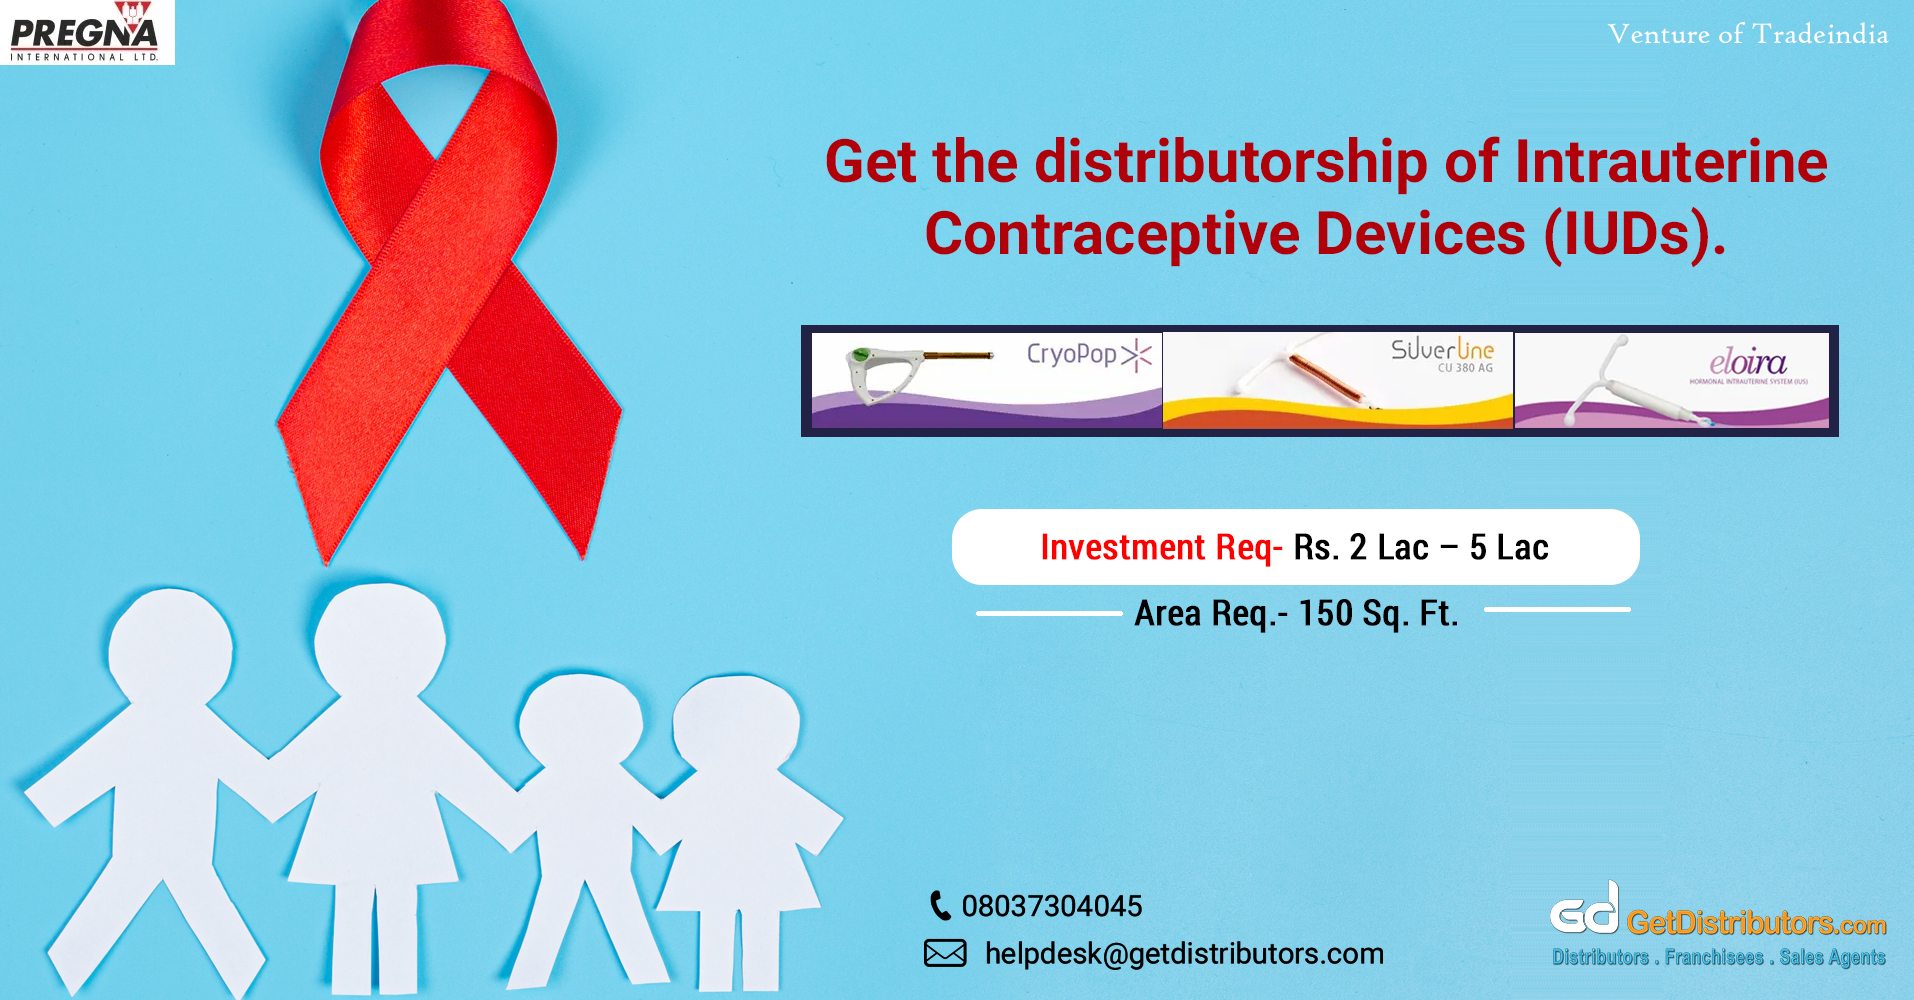 Intrauterine Contraceptive Devices for distribution